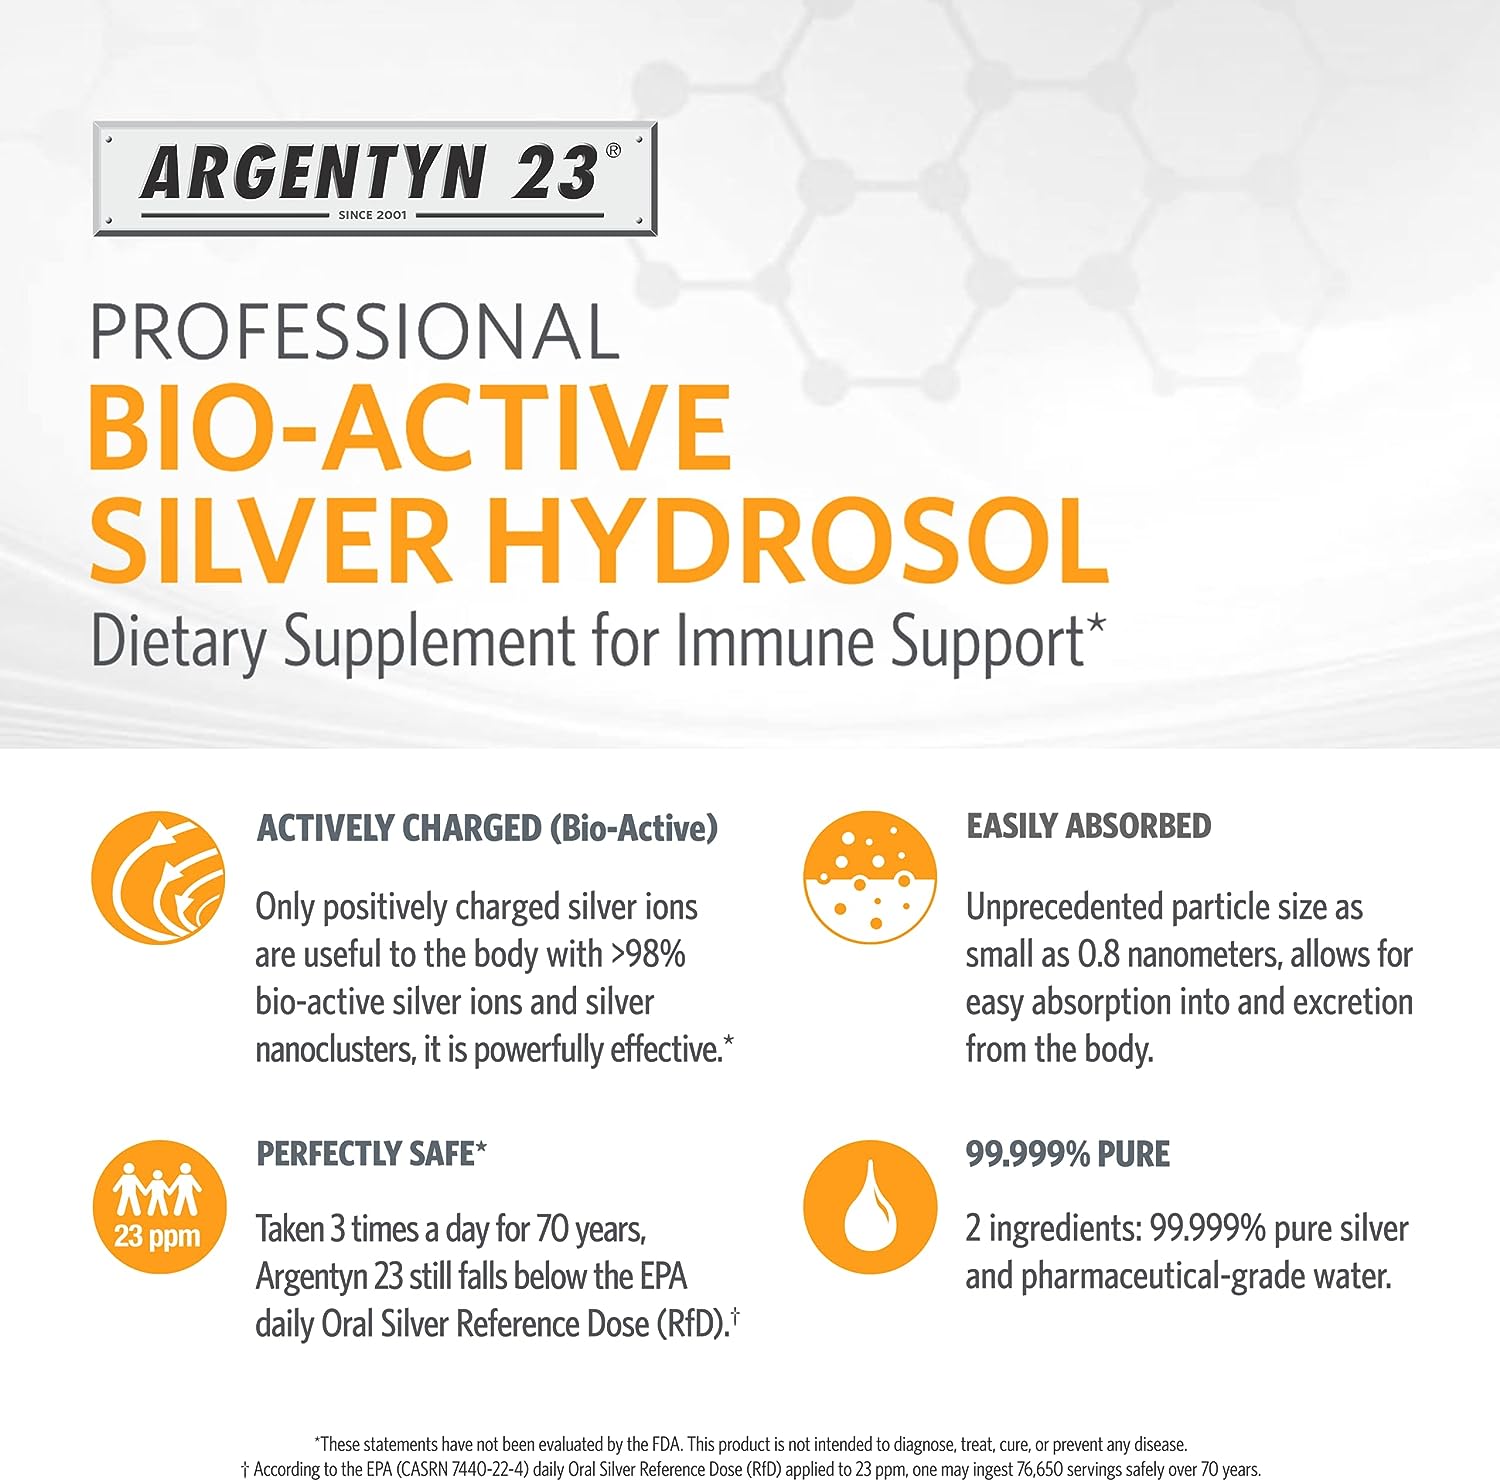 Argentyn 23 Professional Bio-Active Silver Hydrosol for Immune Support